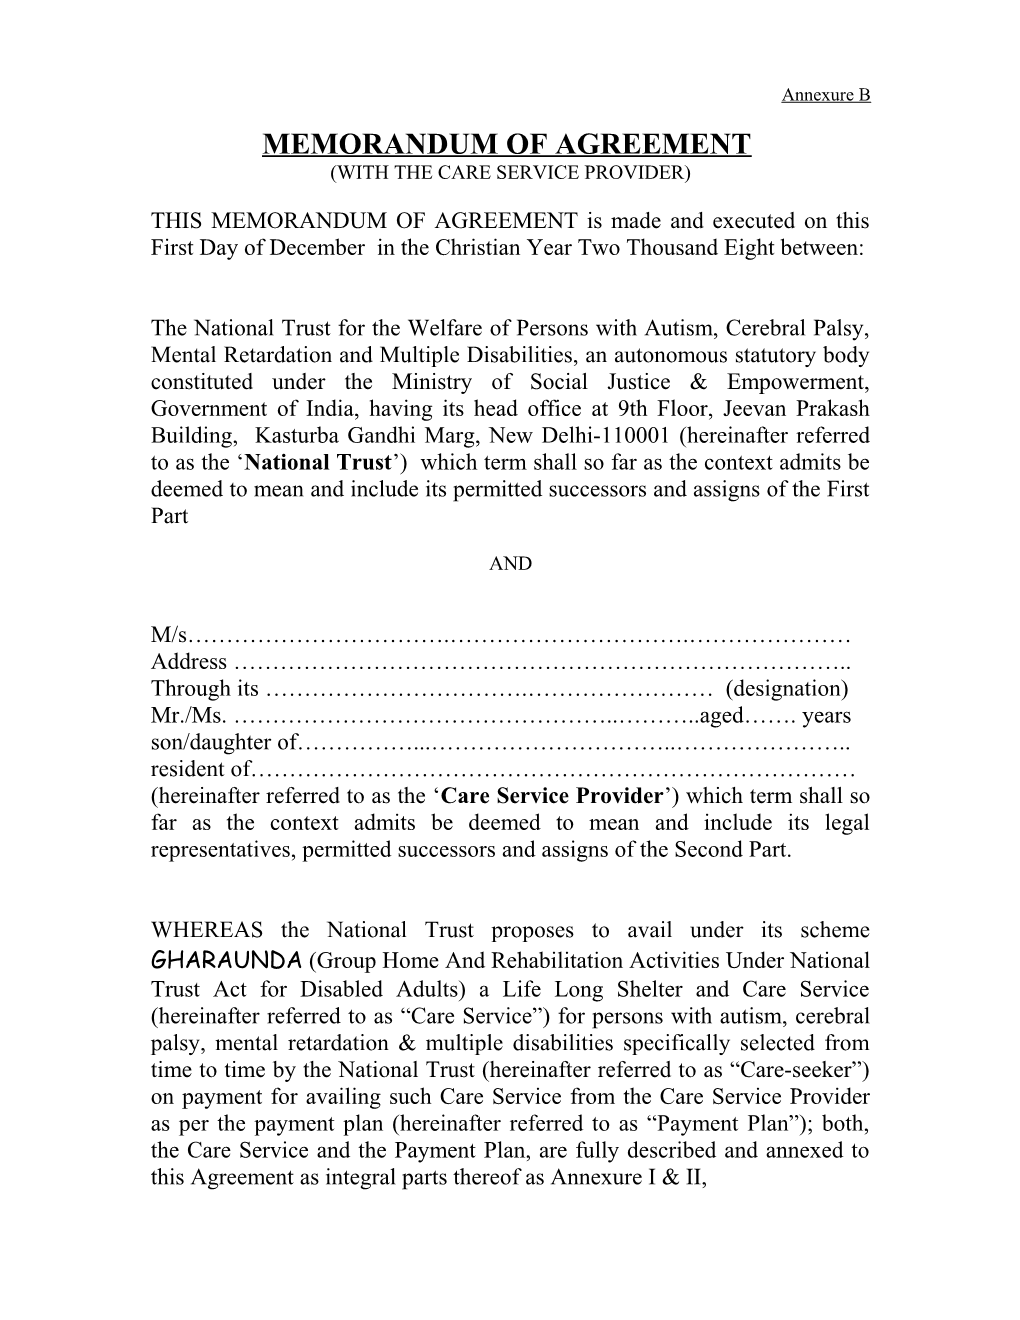 Memorandum of Agreement (With the Beneficiary)